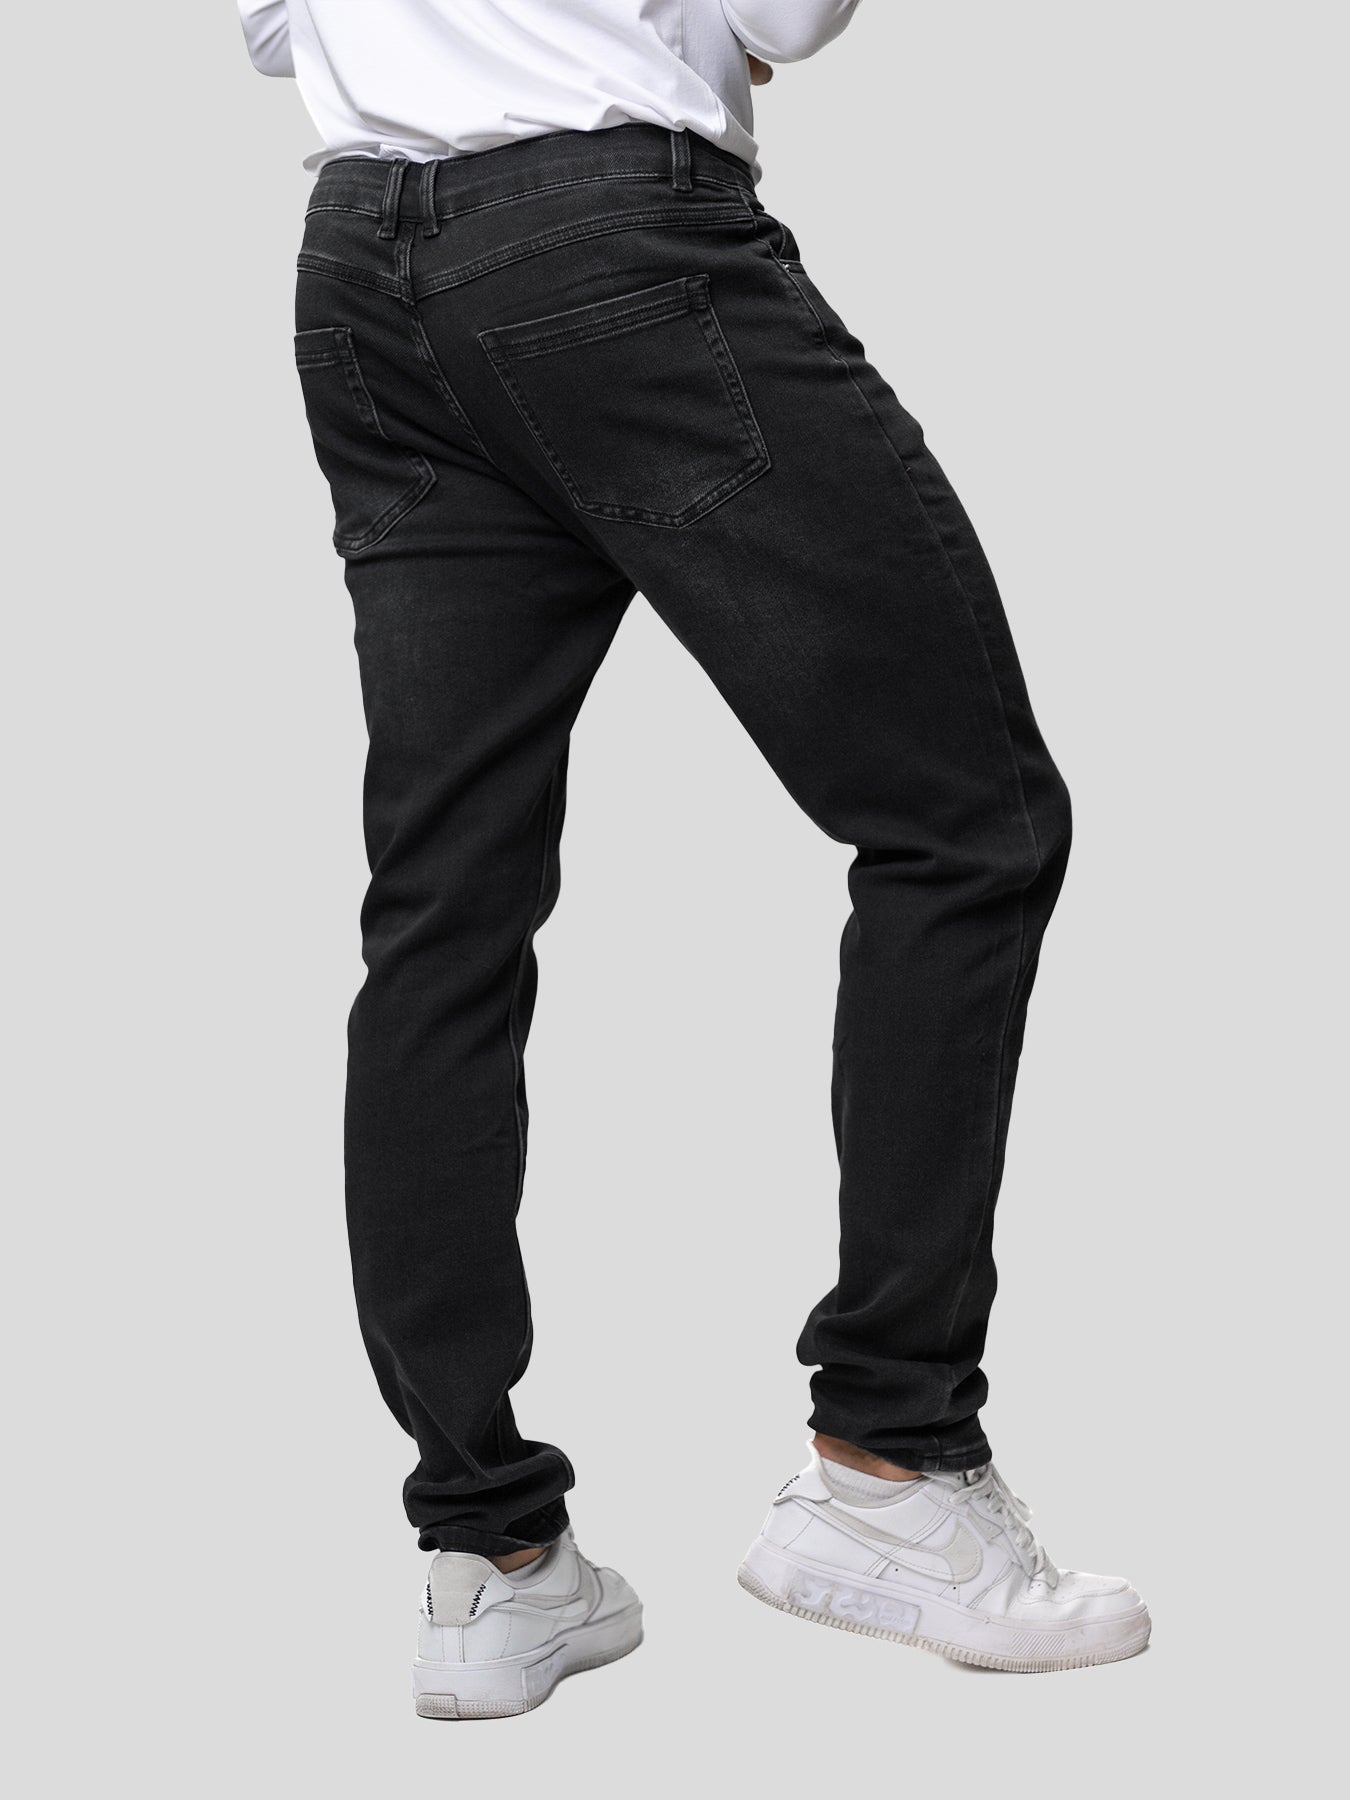 Fioboc Men\'s Classic Stretch Jeans Pants High